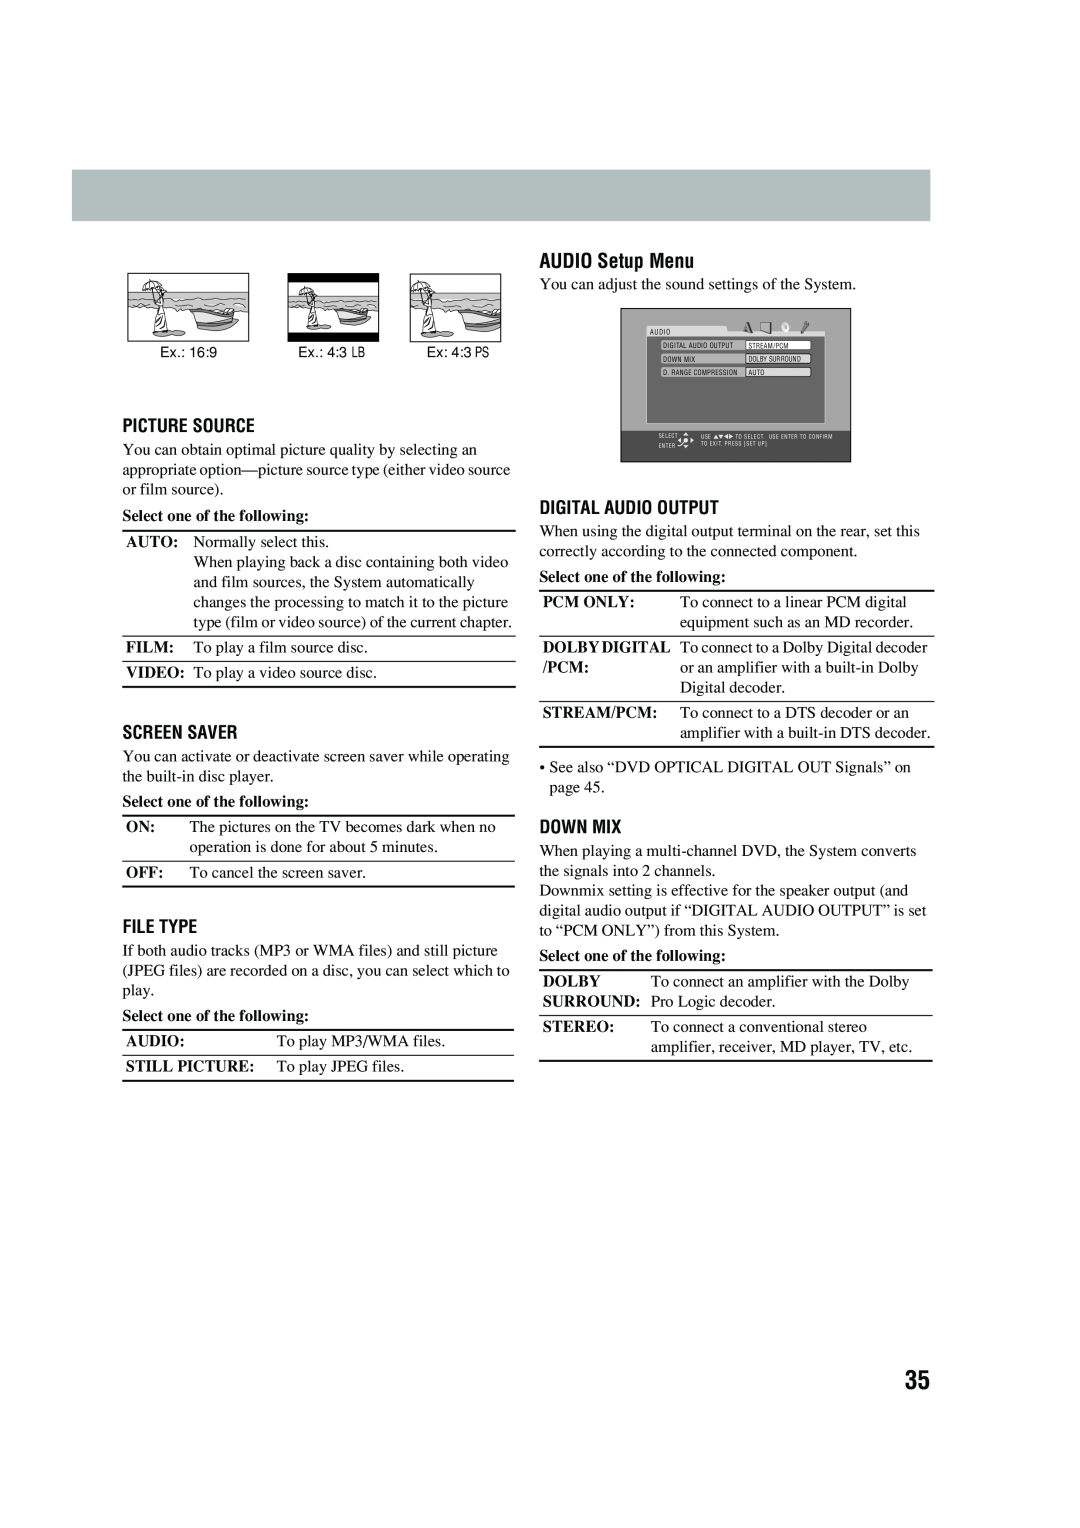 JVC UX-P450 manual AUDIO Setup Menu, Picture Source, Screen Saver, File Type, Digital Audio Output, Down Mix 